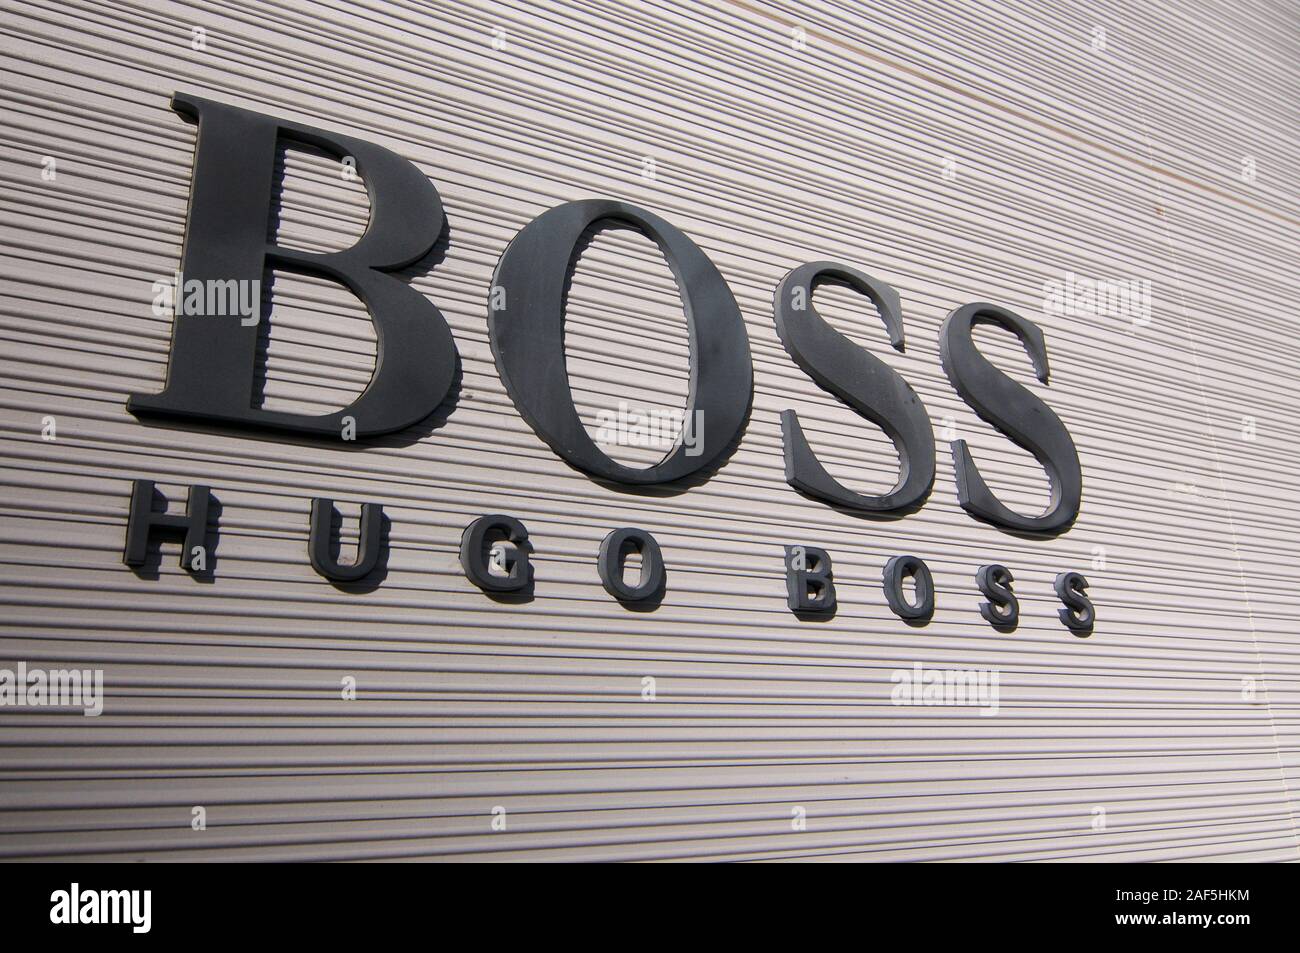 Boss Hugo Boss Logo High Resolution Stock Photography and Images - Alamy